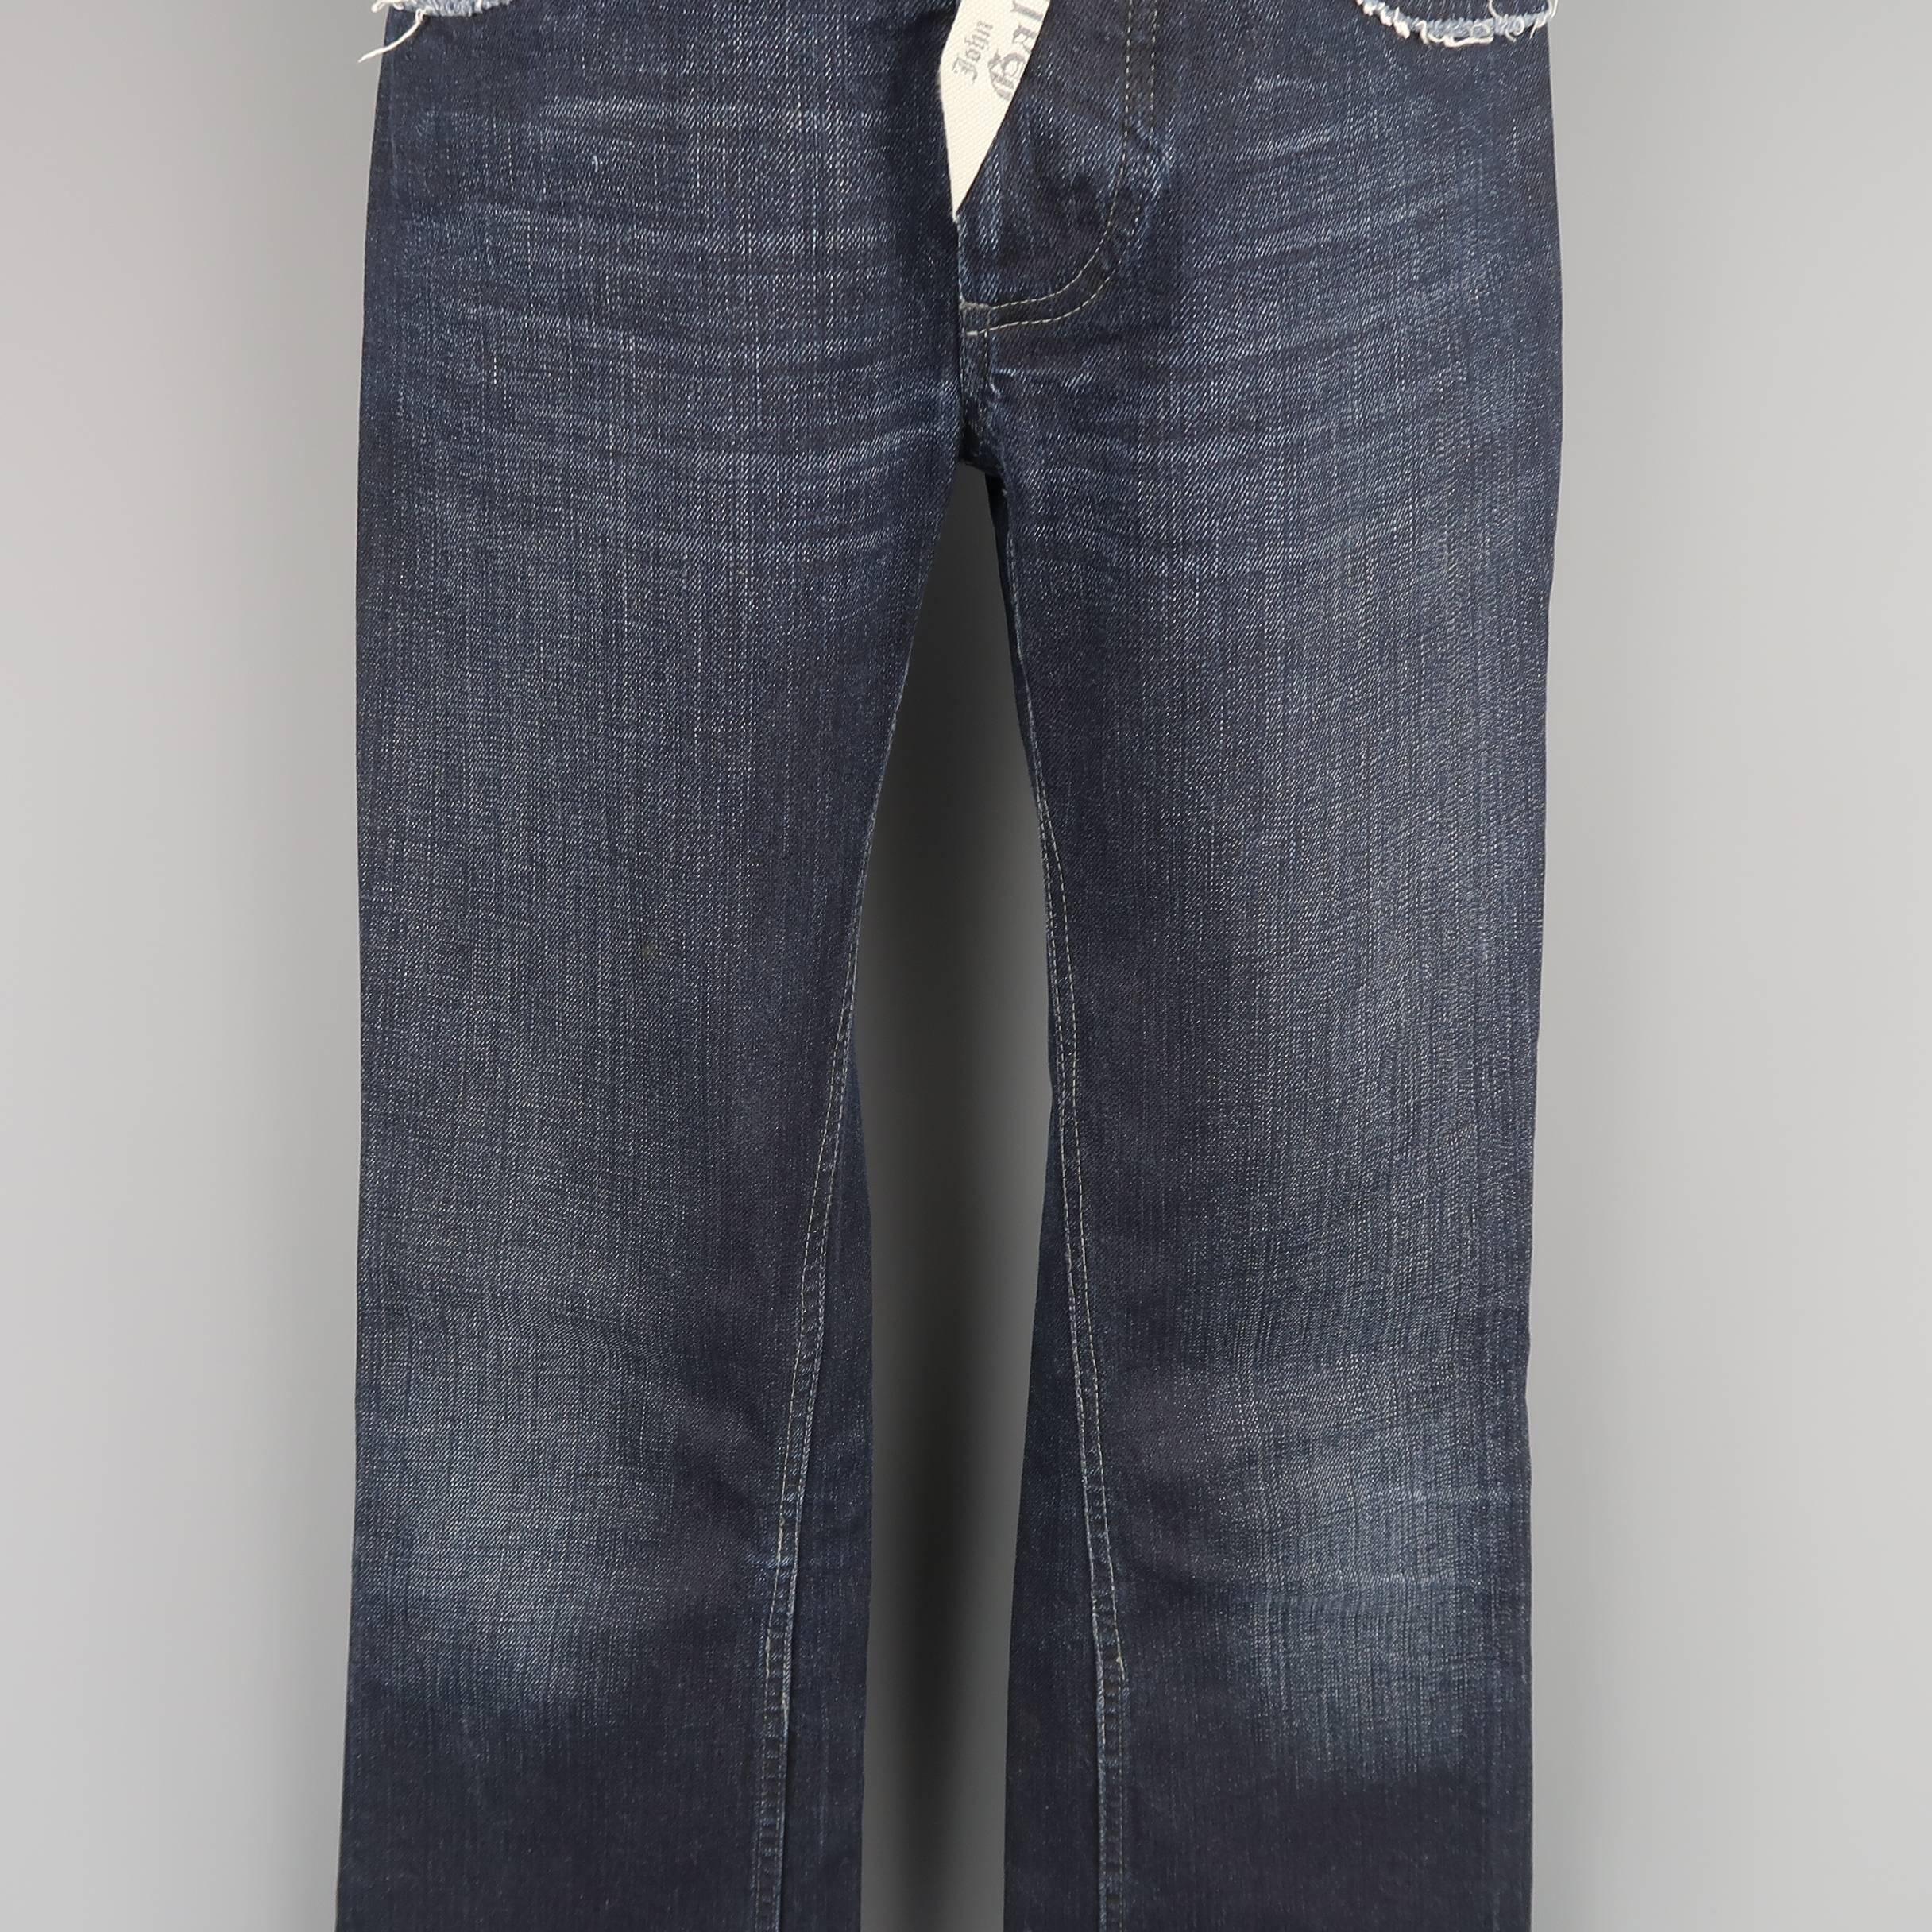 Black Men's JOHN GALLIANO Size 30 Navy Wash Distressed Denim Back Hoop Jeans